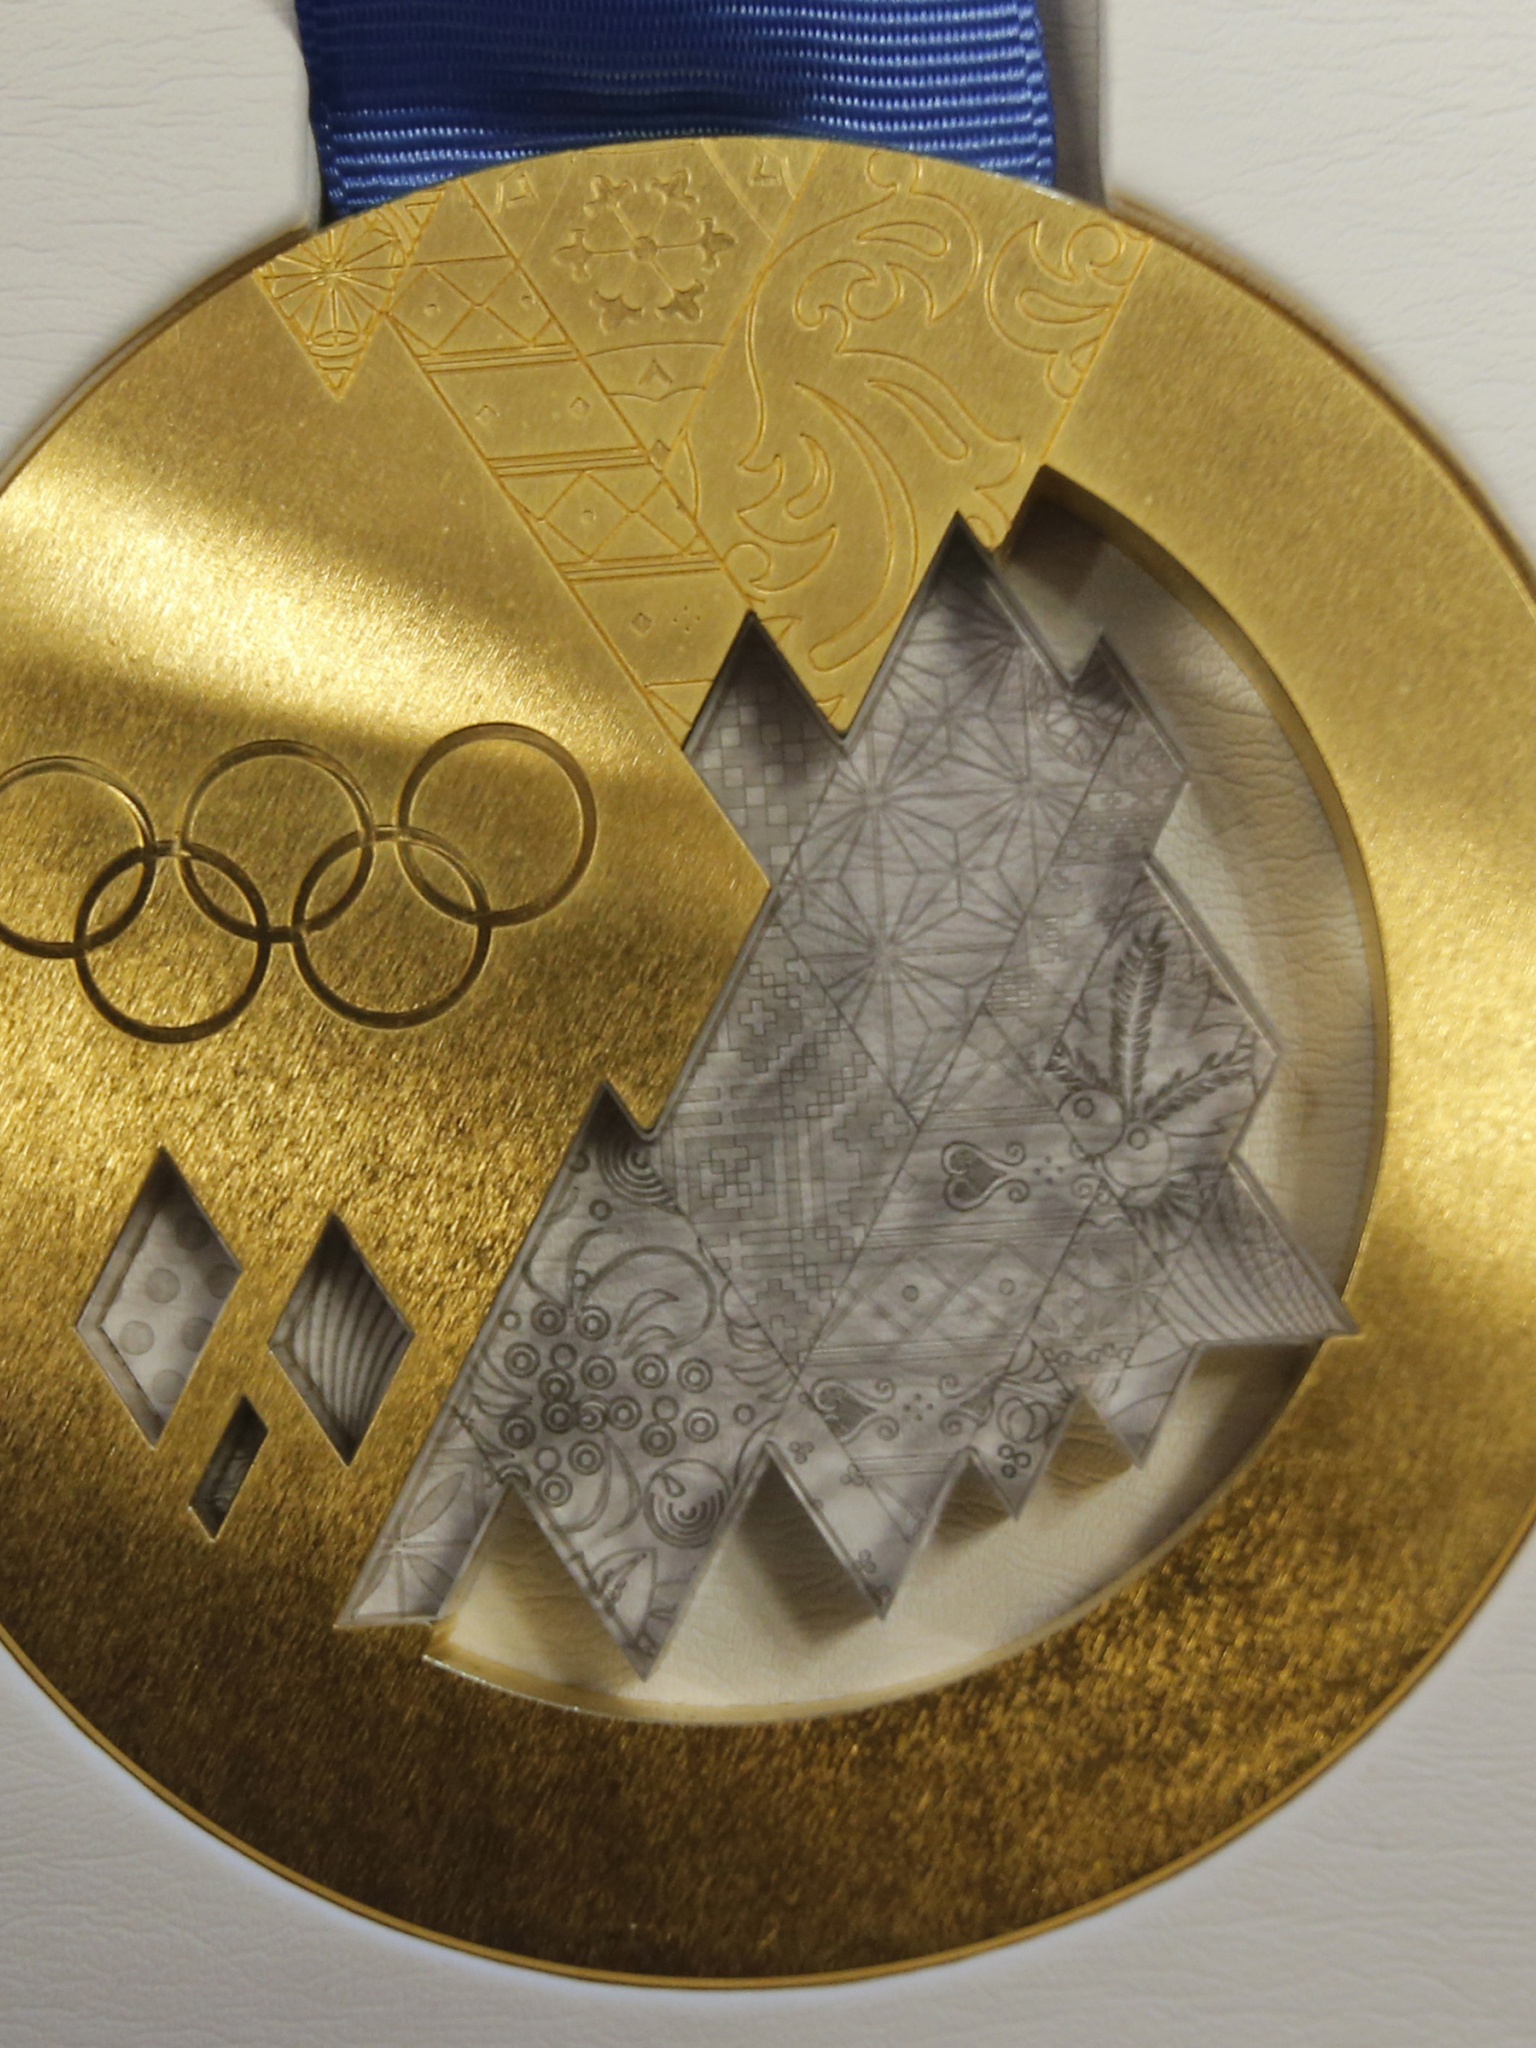 Sochi 2014 Olympic Gold Medal